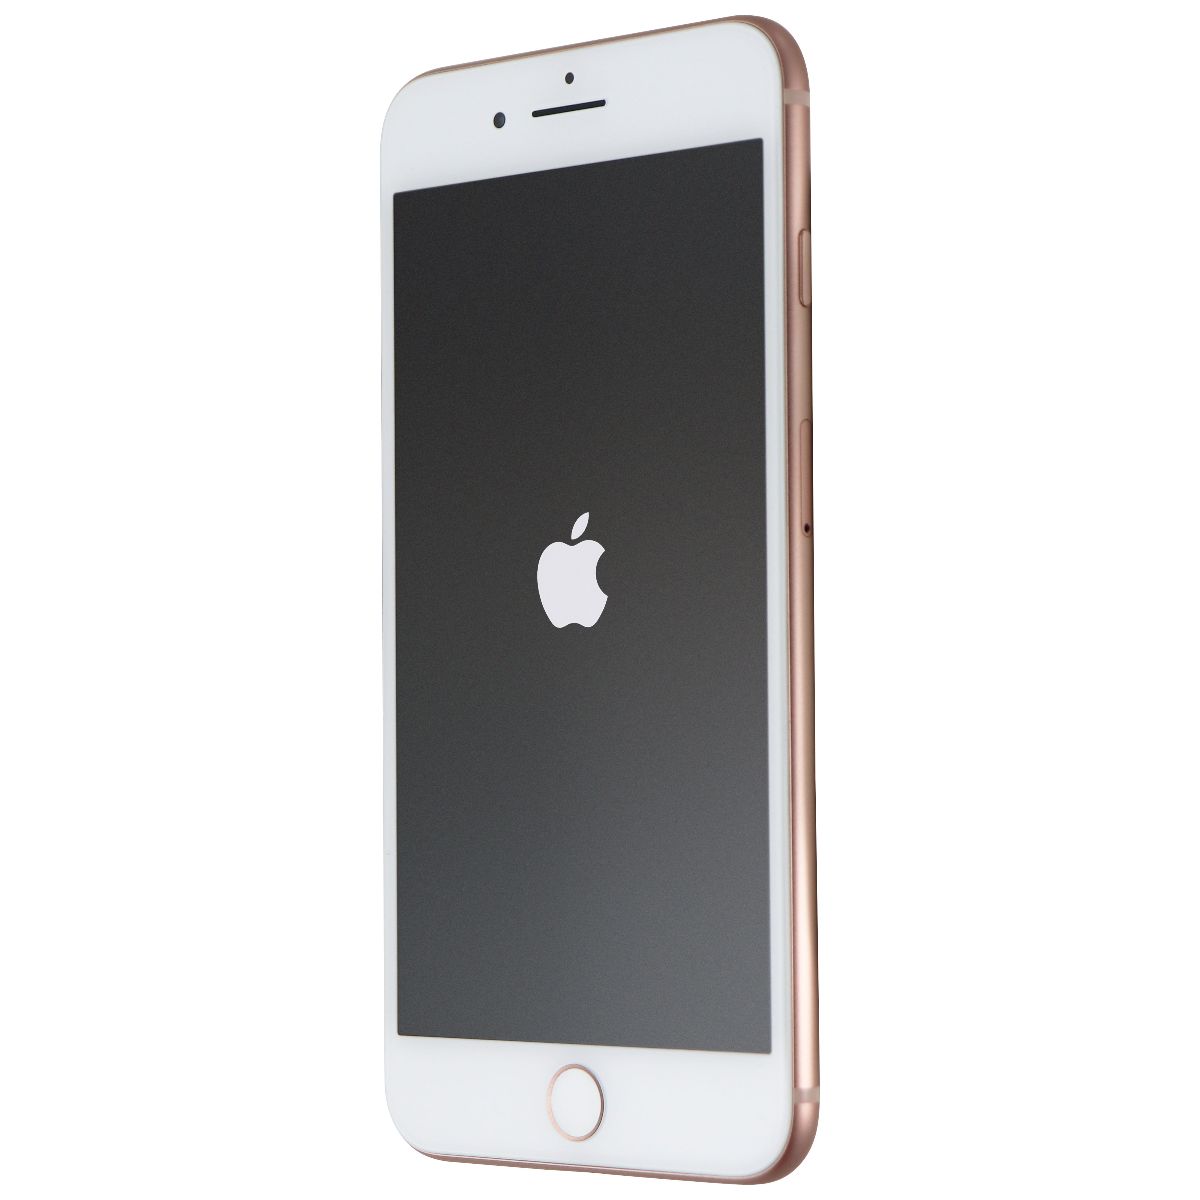 Apple iPhone 8 Plus Smartphone (A1897) Unlocked - 64GB / Gold Cell Phones & Smartphones Apple    - Simple Cell Bulk Wholesale Pricing - USA Seller